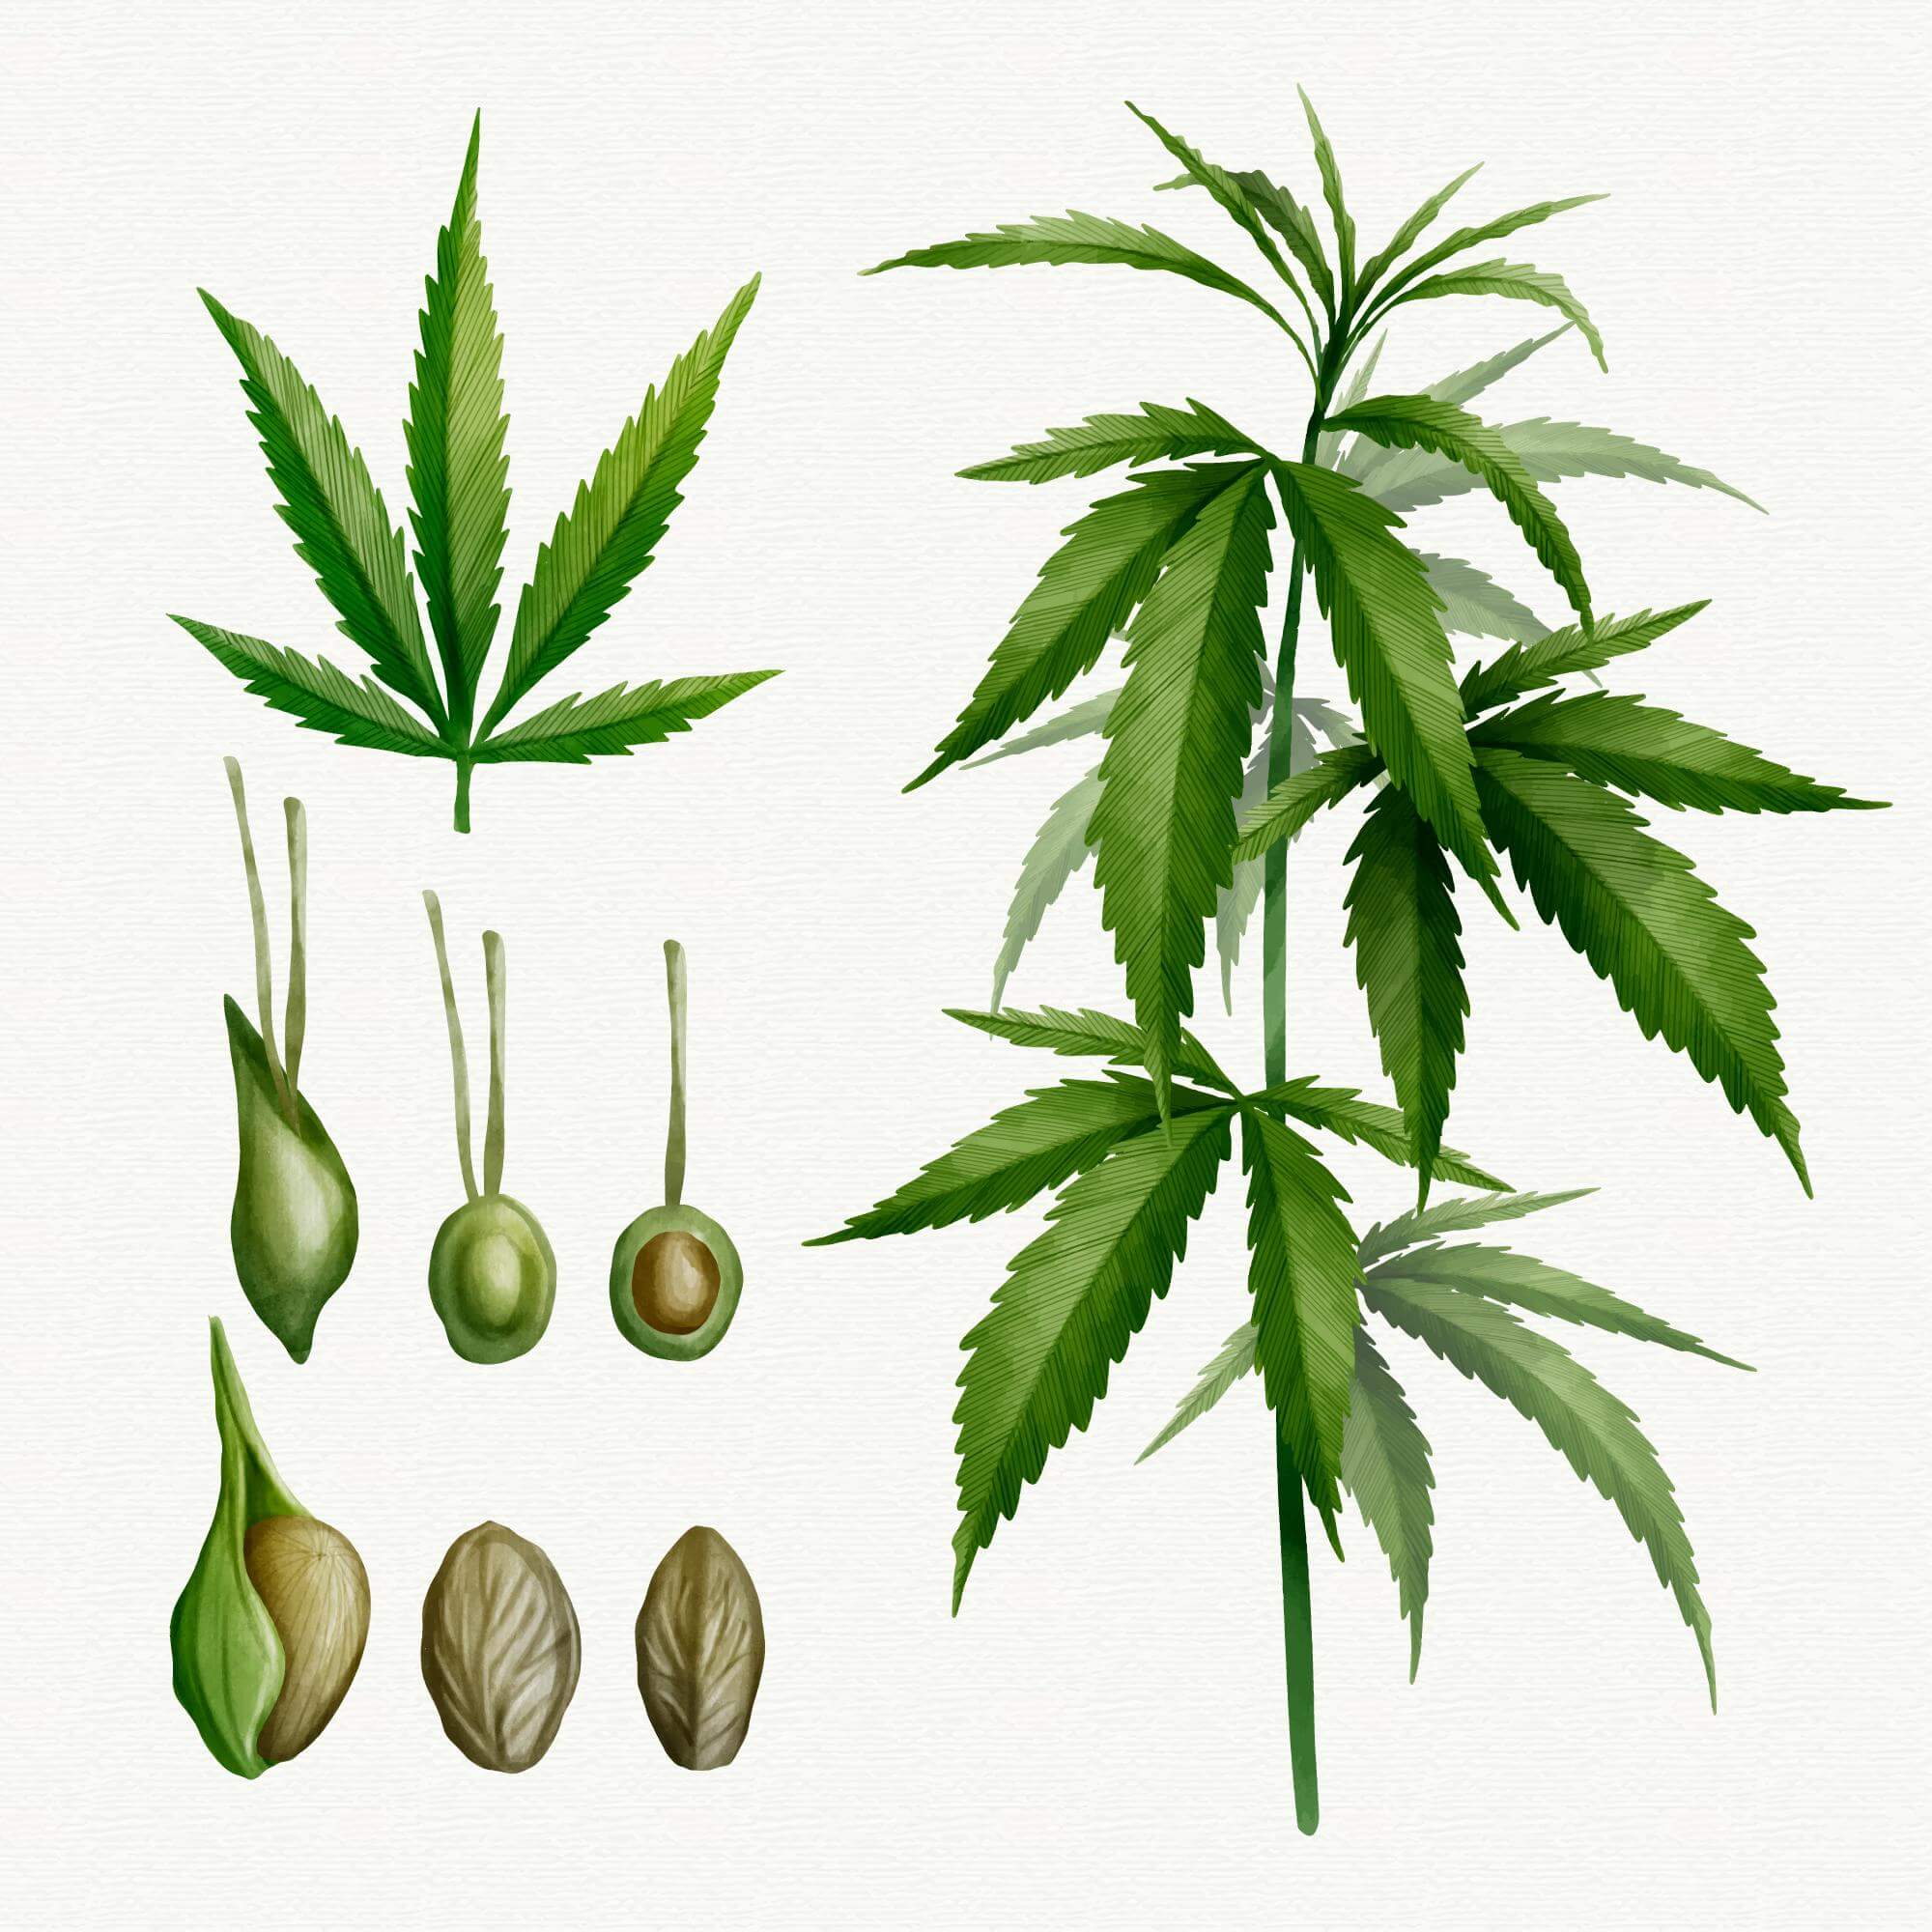 Hemp and Marijuana THC Distinctions